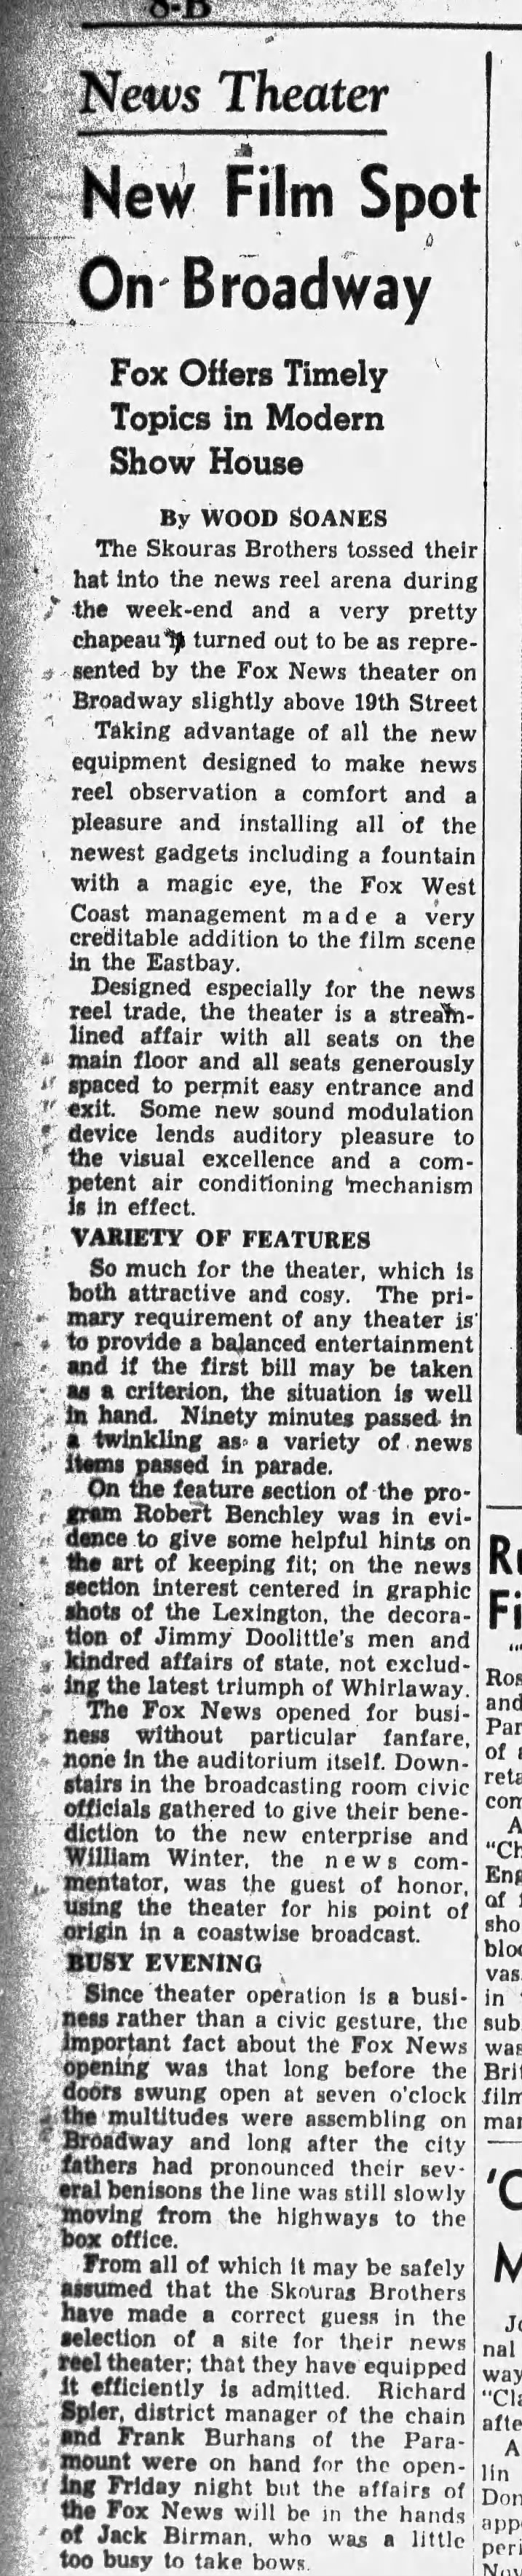 New Film Spot on Broadway - Oakland Tribune July 5, 1942